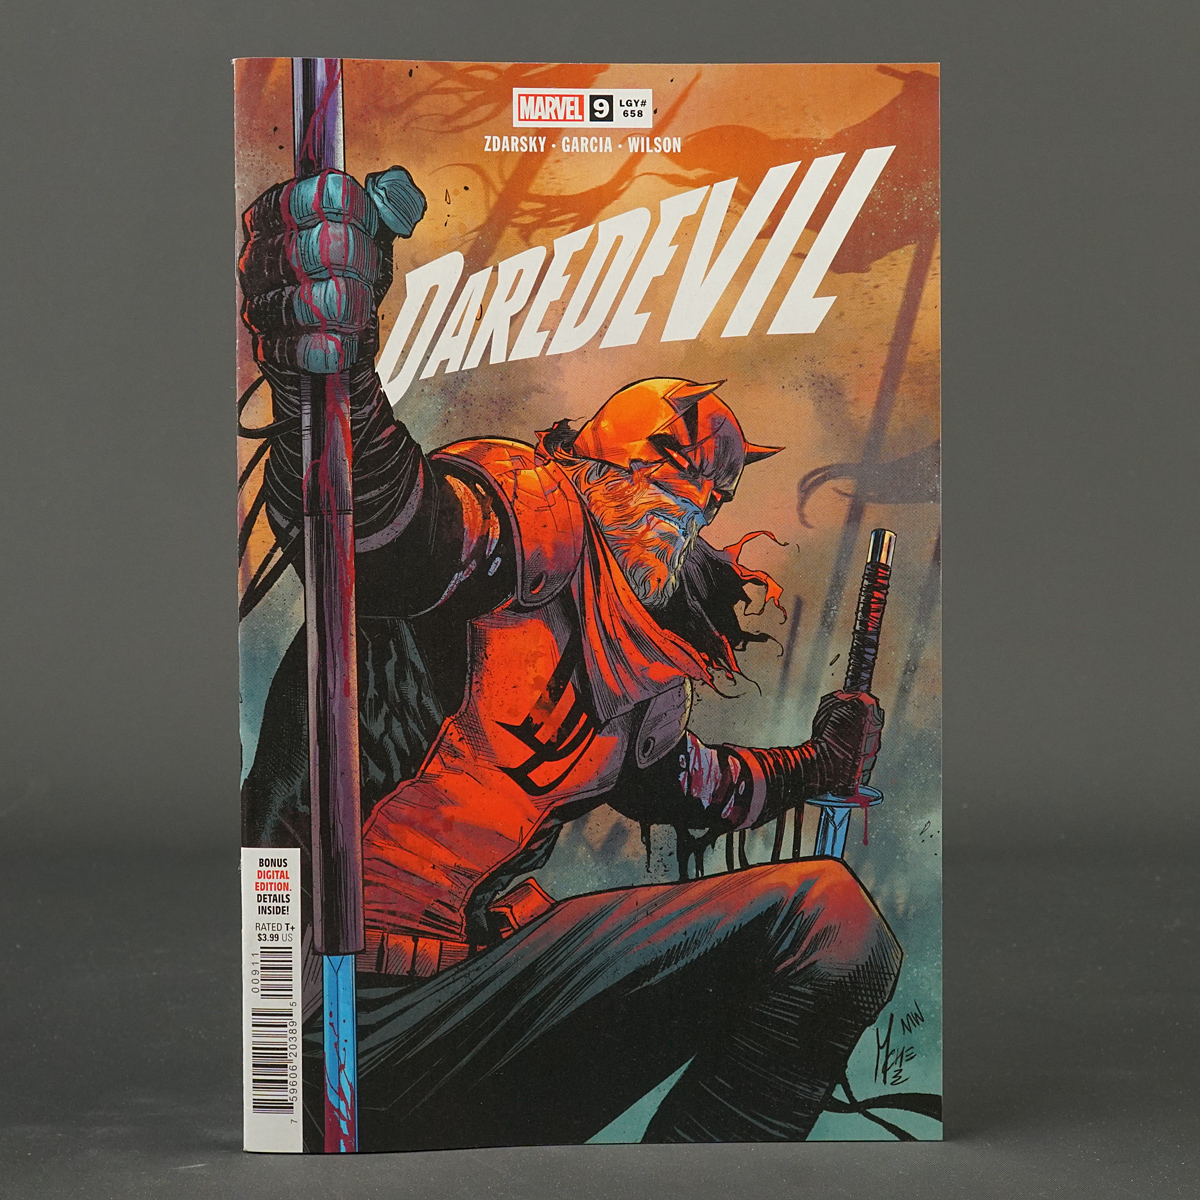 DAREDEVIL #9 Marvel Comics JAN230964 (W) Zdarsky (CA) Checchetto (A) De Latorre